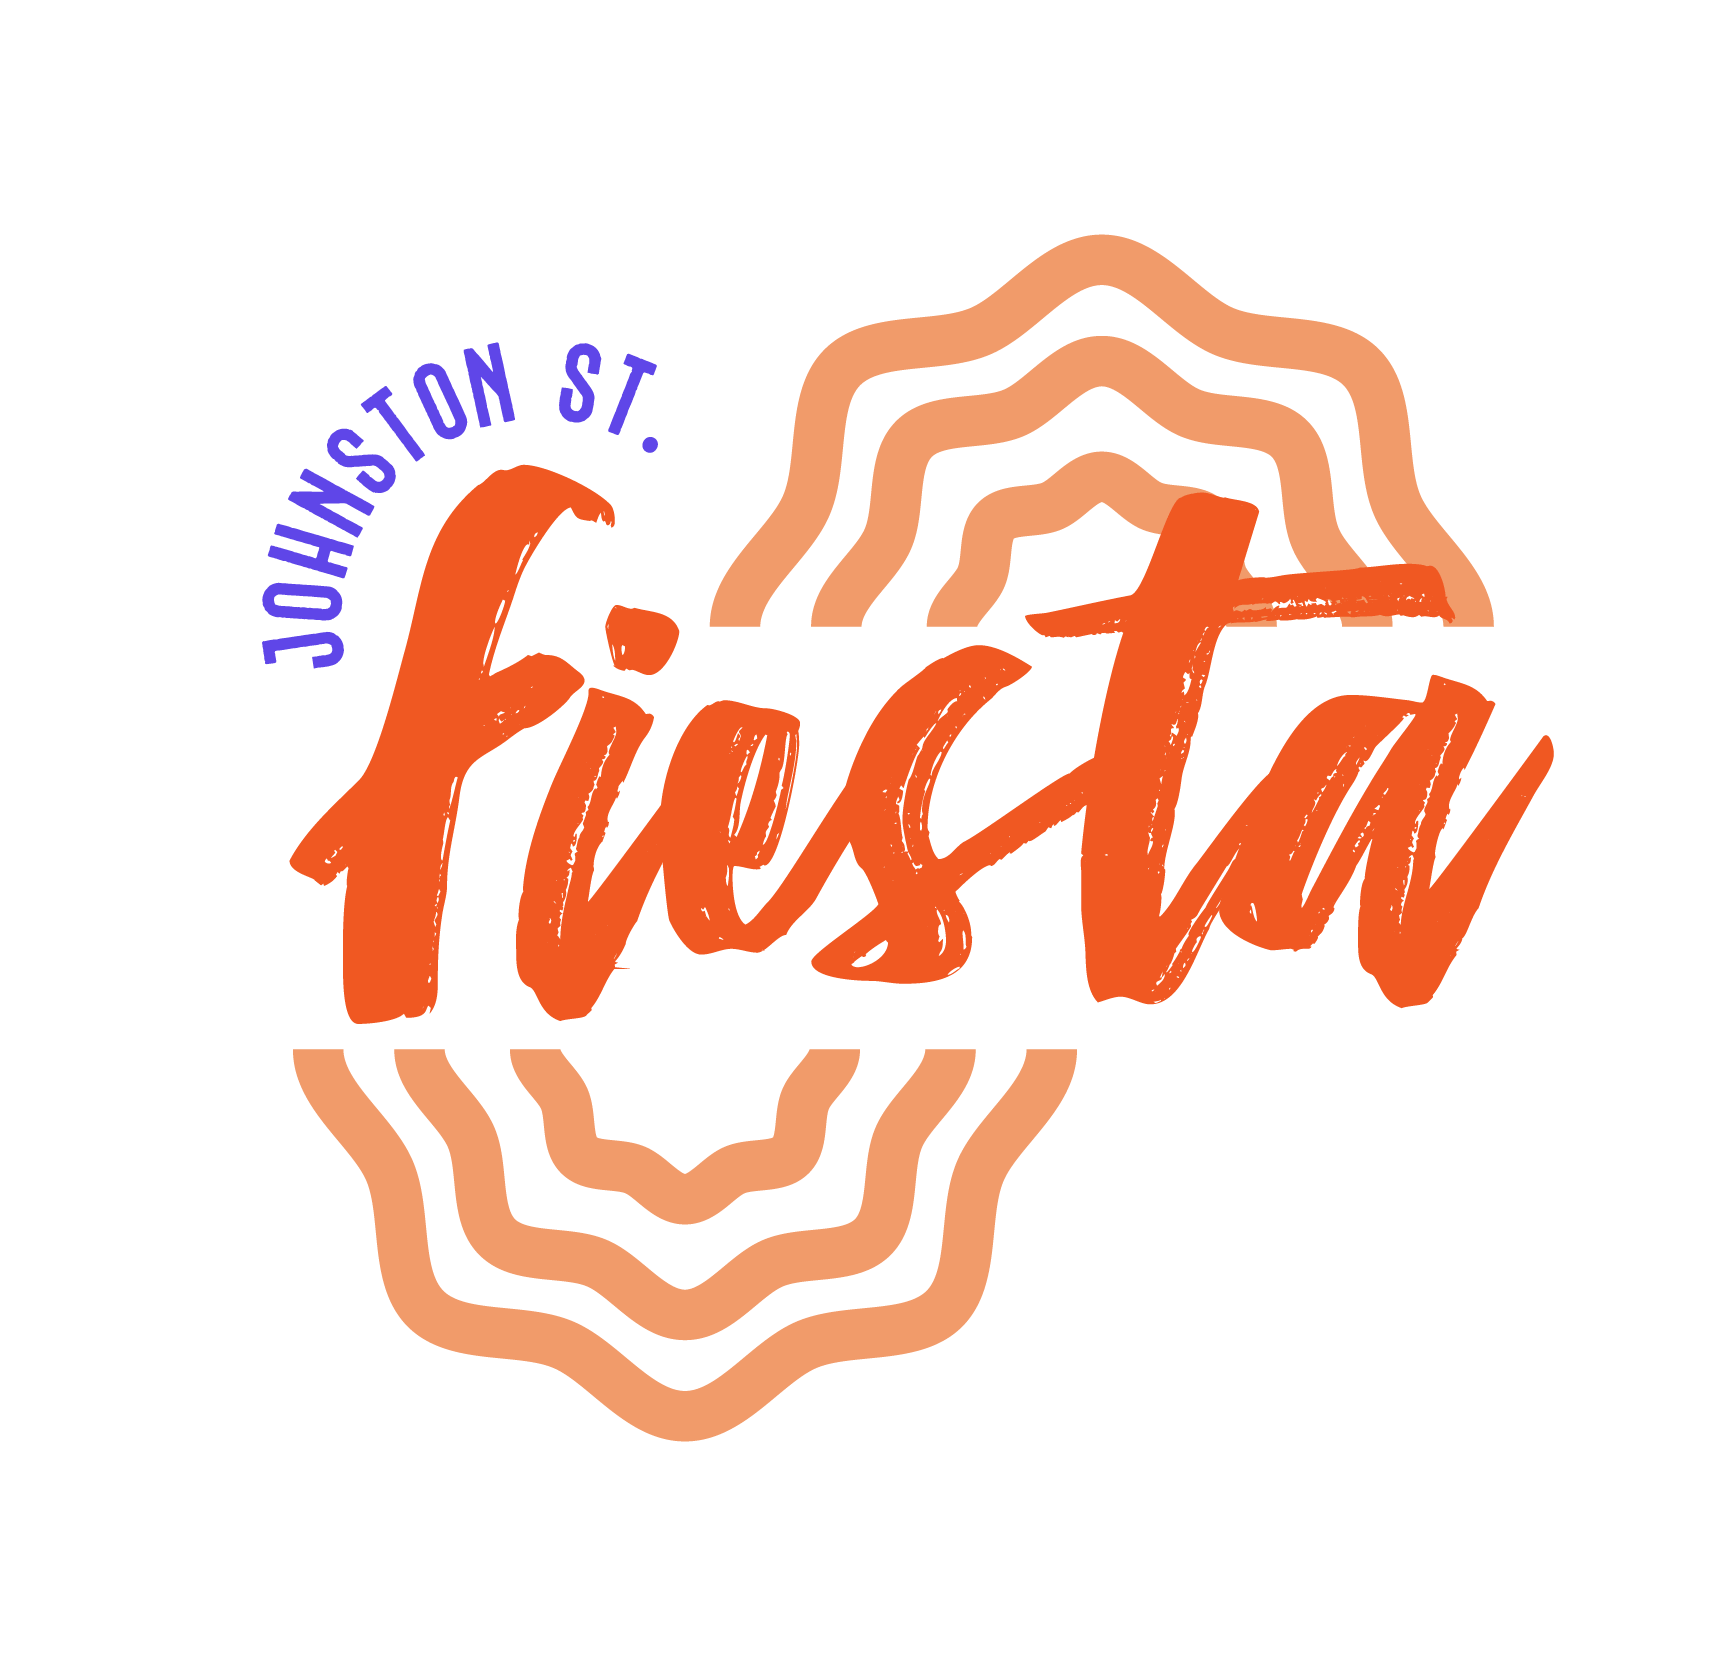 HILA Fiesta – Johnston St Latin Festival